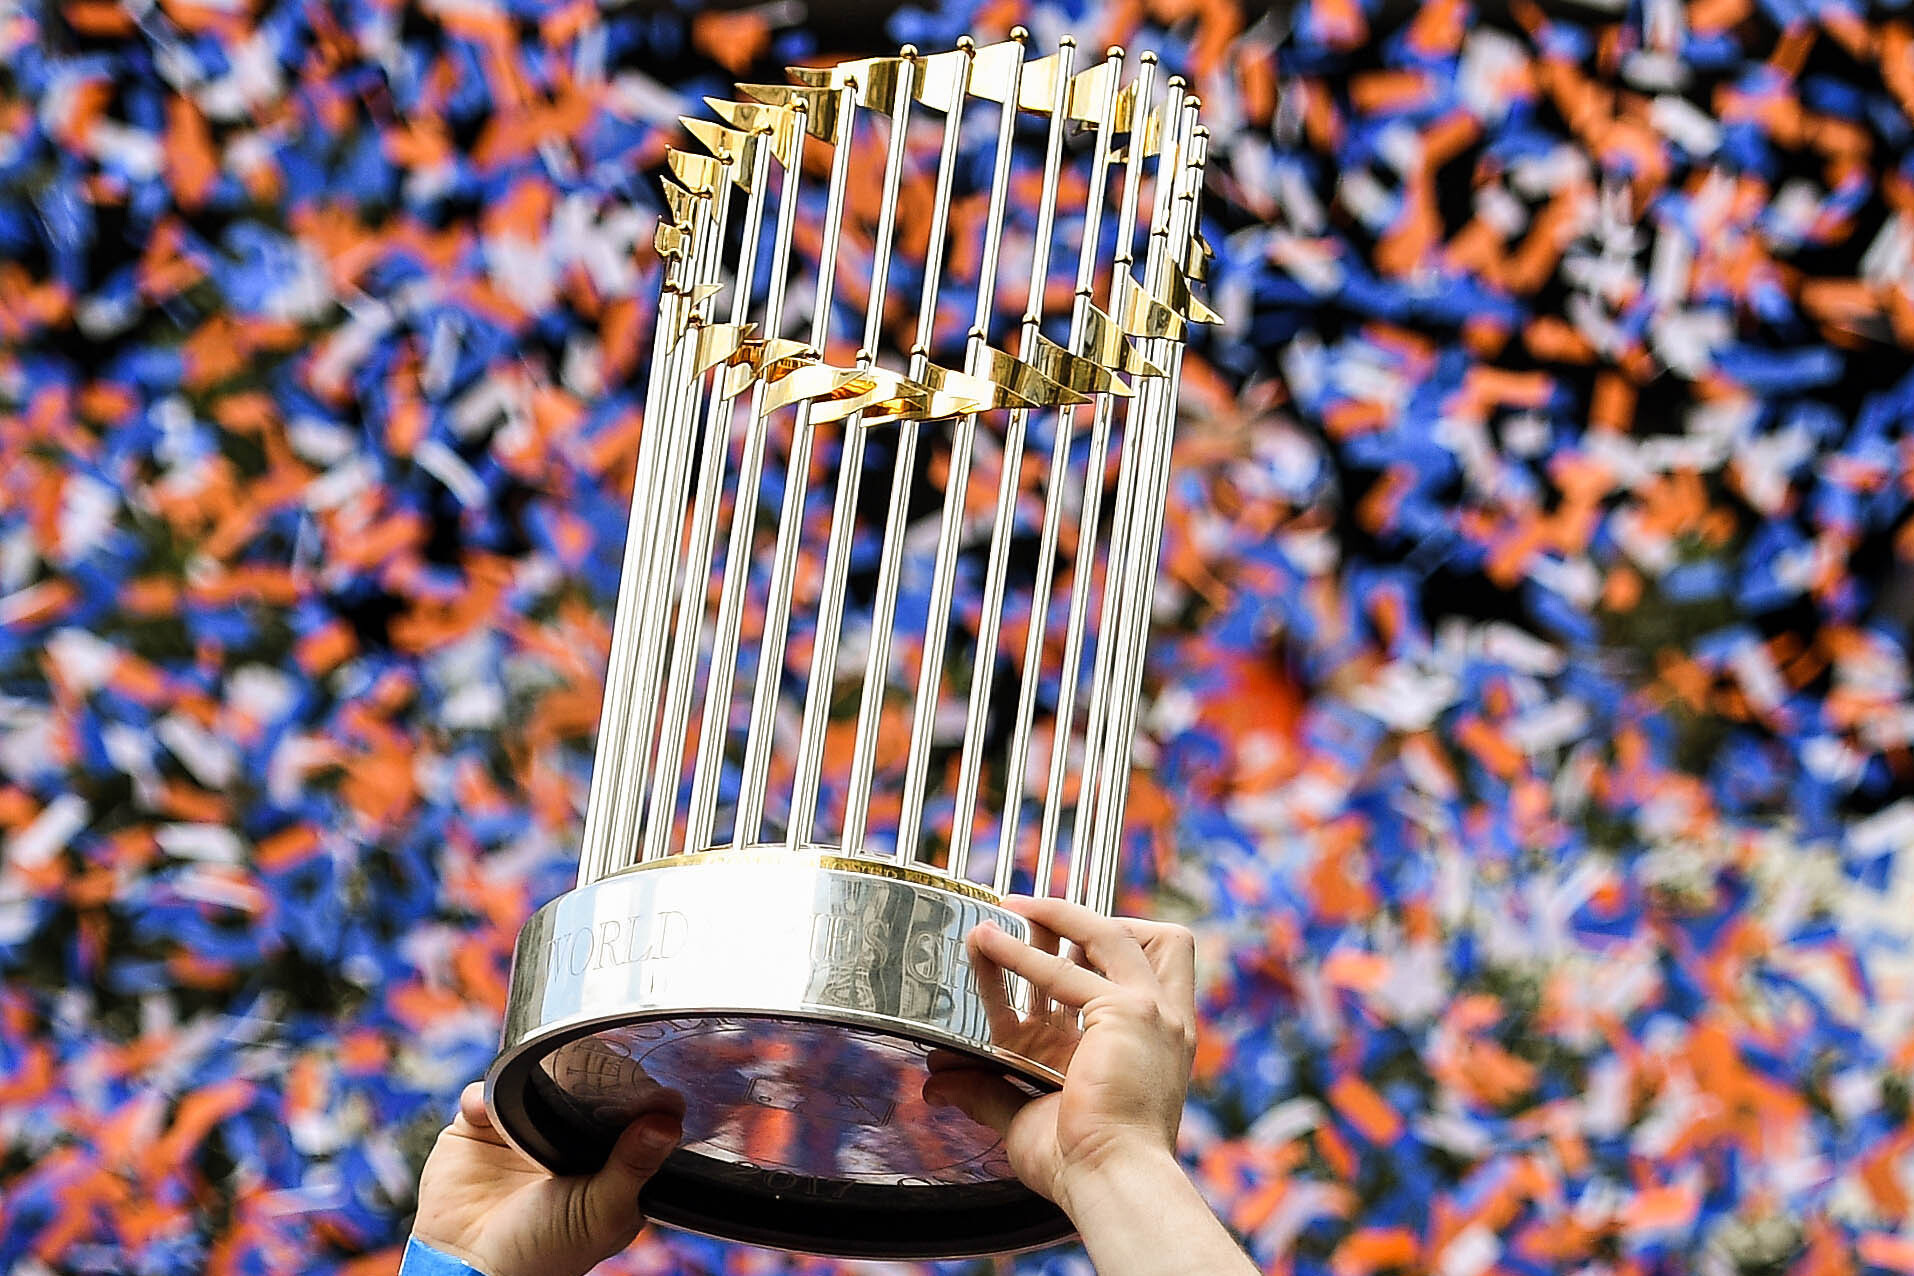 Details about Thursday's World Series trophy visit revealed